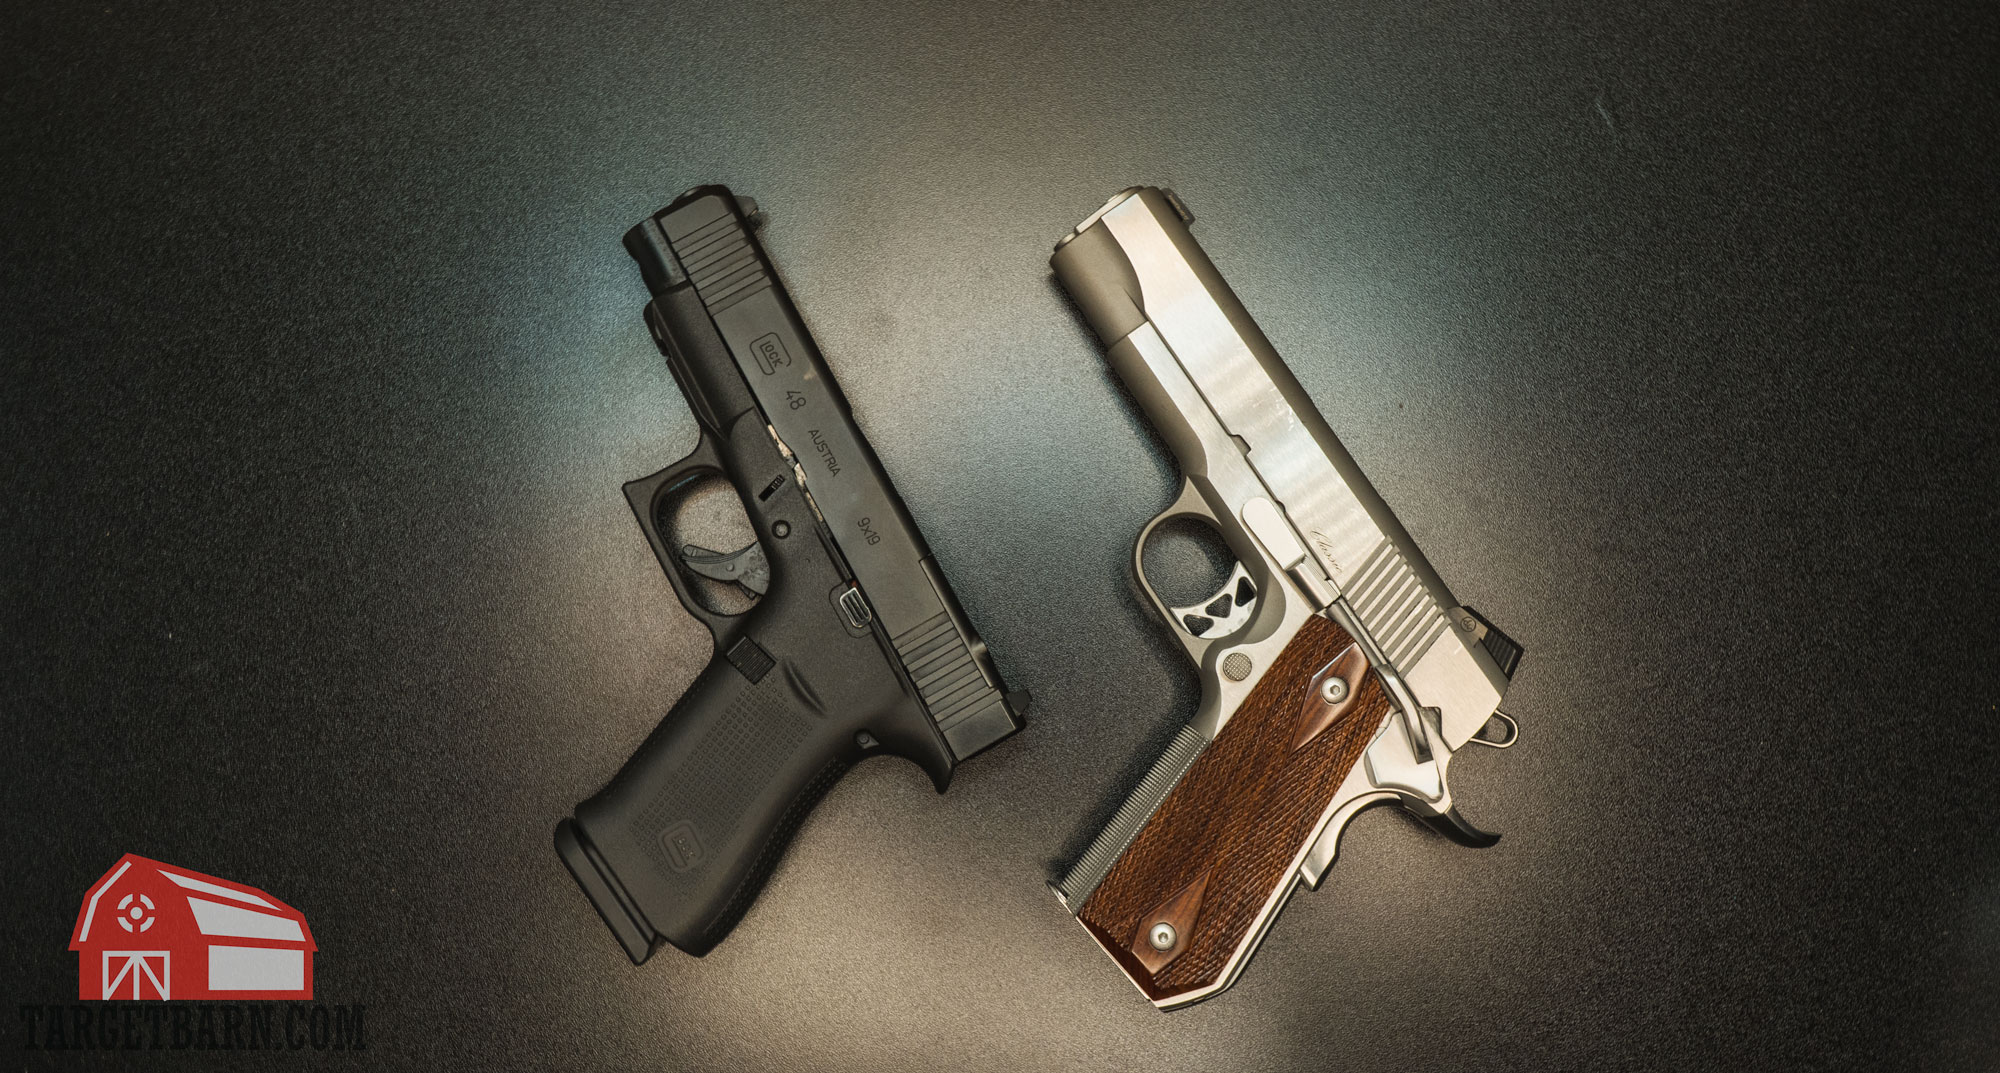 a 9mm glock 48 pistol next to a .45 ACP dan wesson commander classic pistol